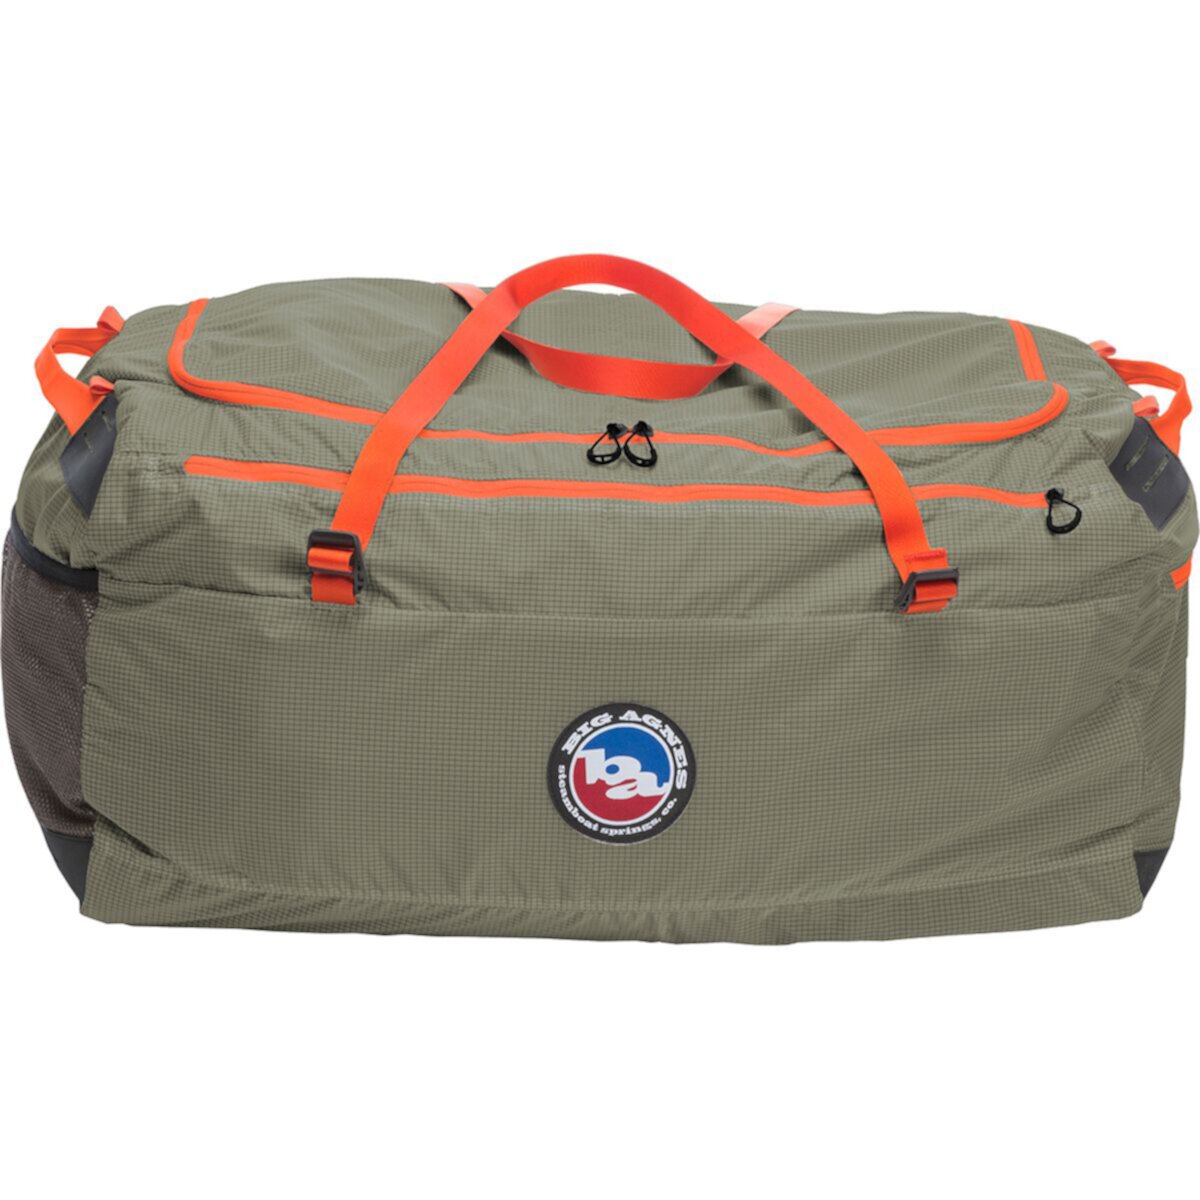 Спортивная сумка Camp Kit 45 л Big Agnes